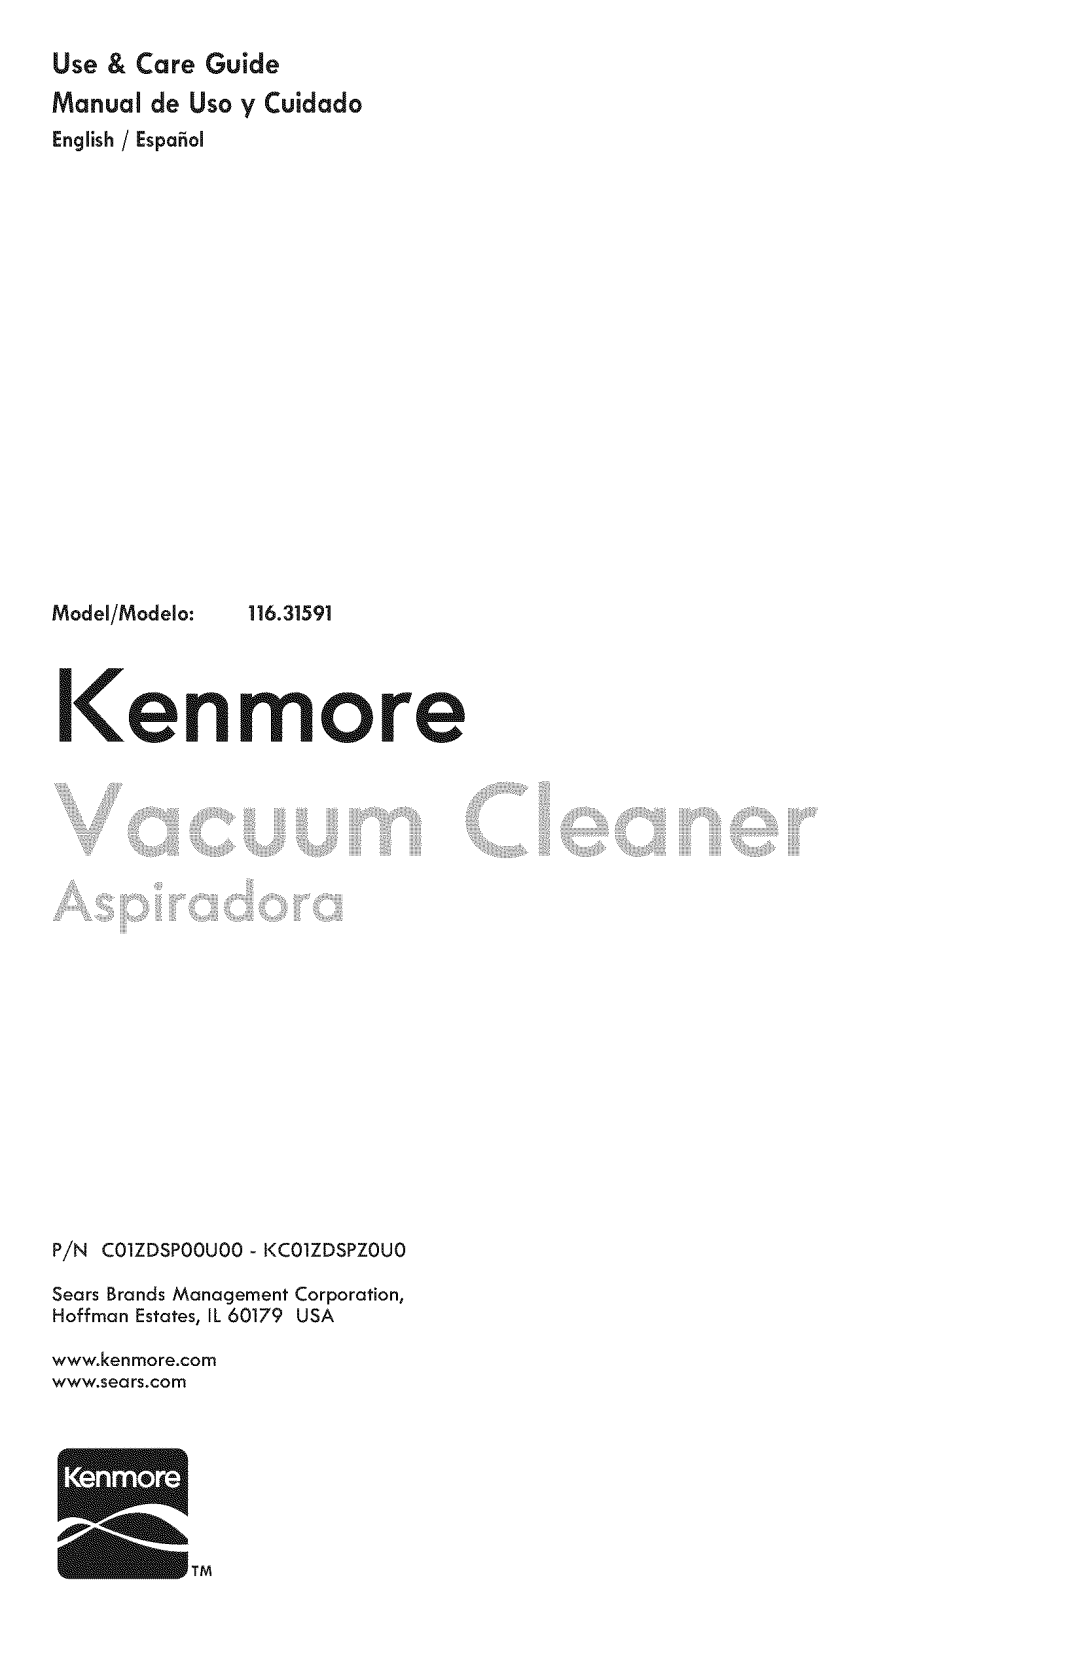 Kenmore 116.31591 manual Use & Care Guide Manual de Use ¥ Cuidado, English/ Espa_ol 